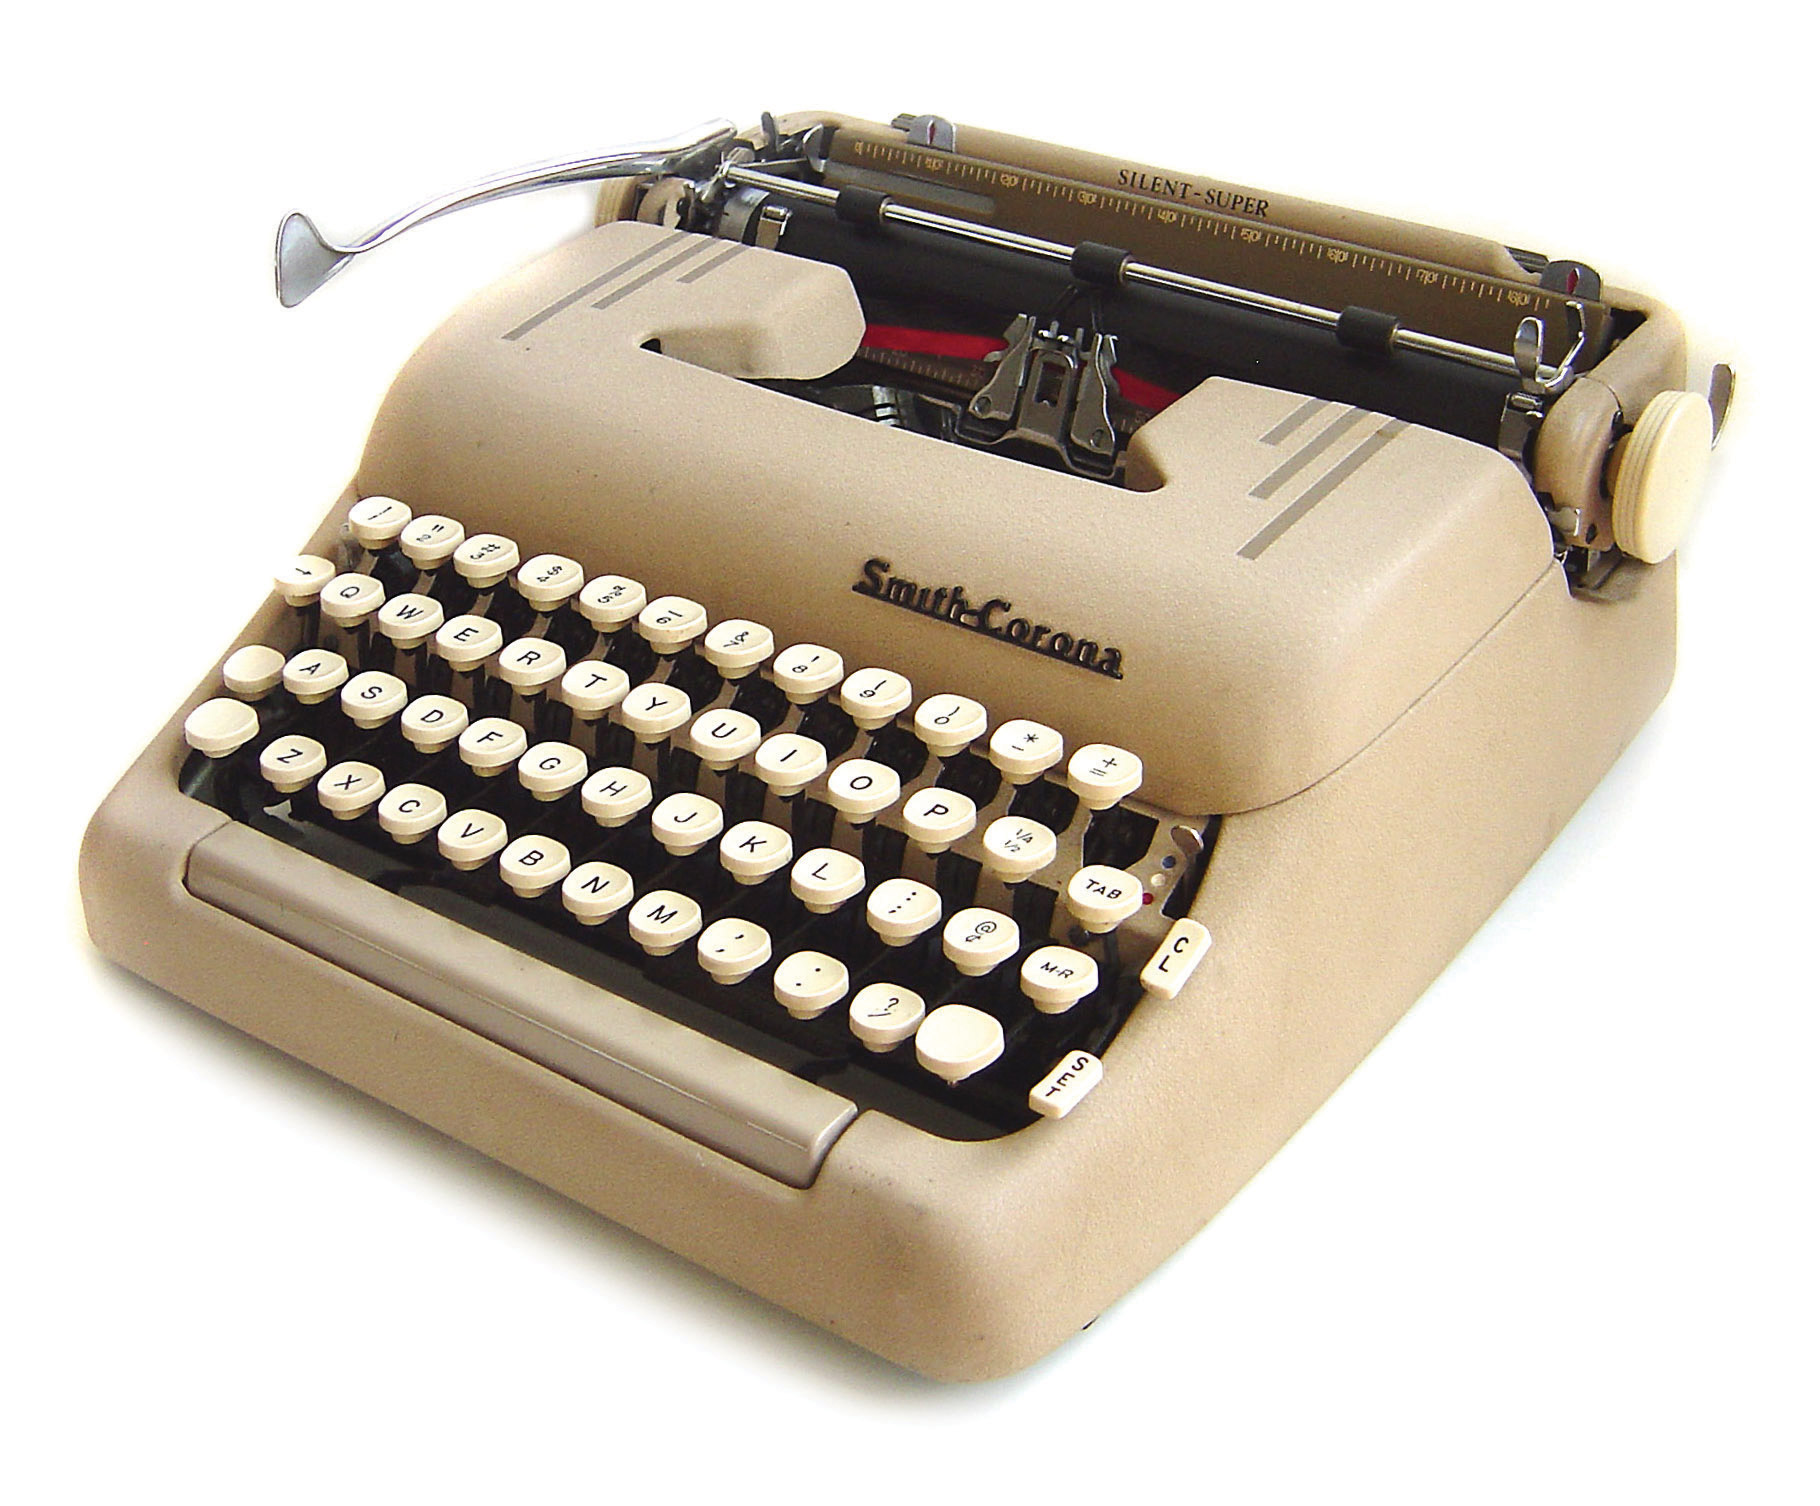 Smith-Corona Silent-Super typewriter